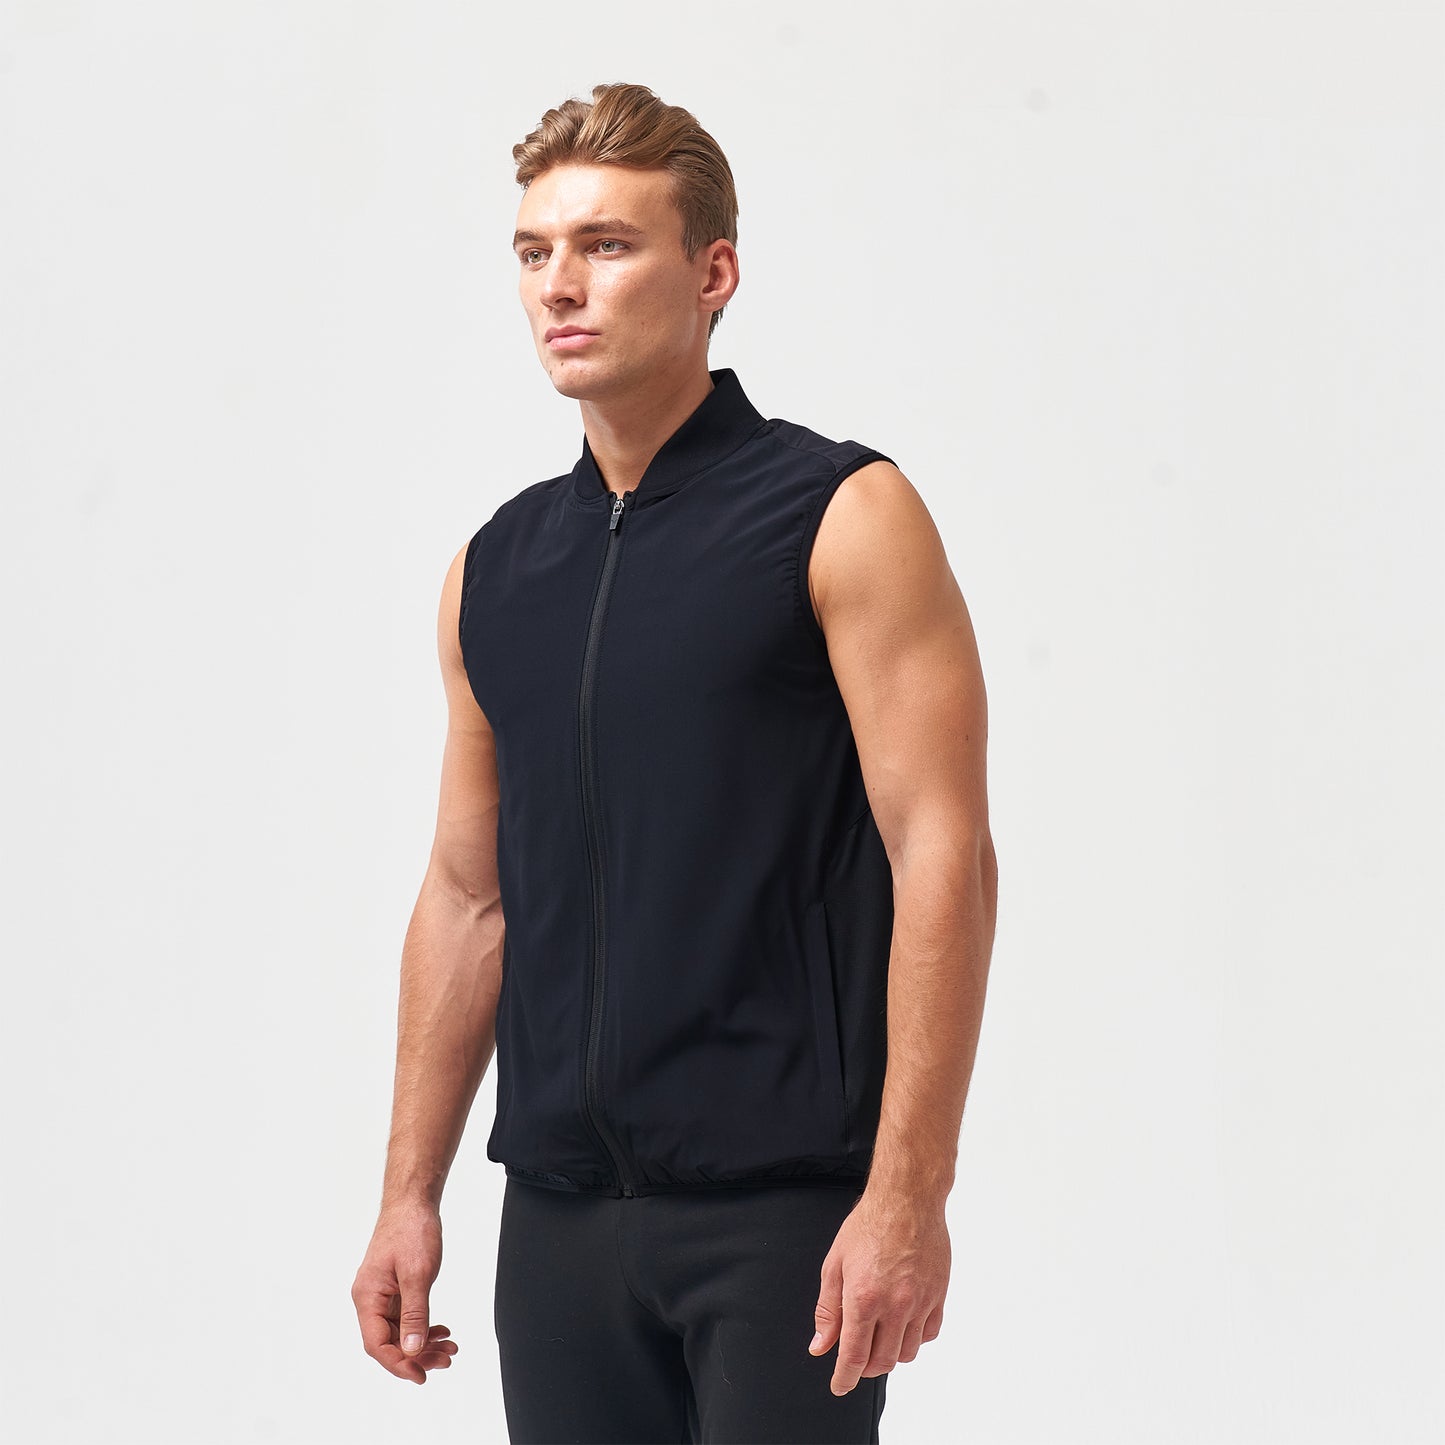 squatwolf-gym-wear-sleeves-less-lab-360-running-gilet–black-running-tops-for-men